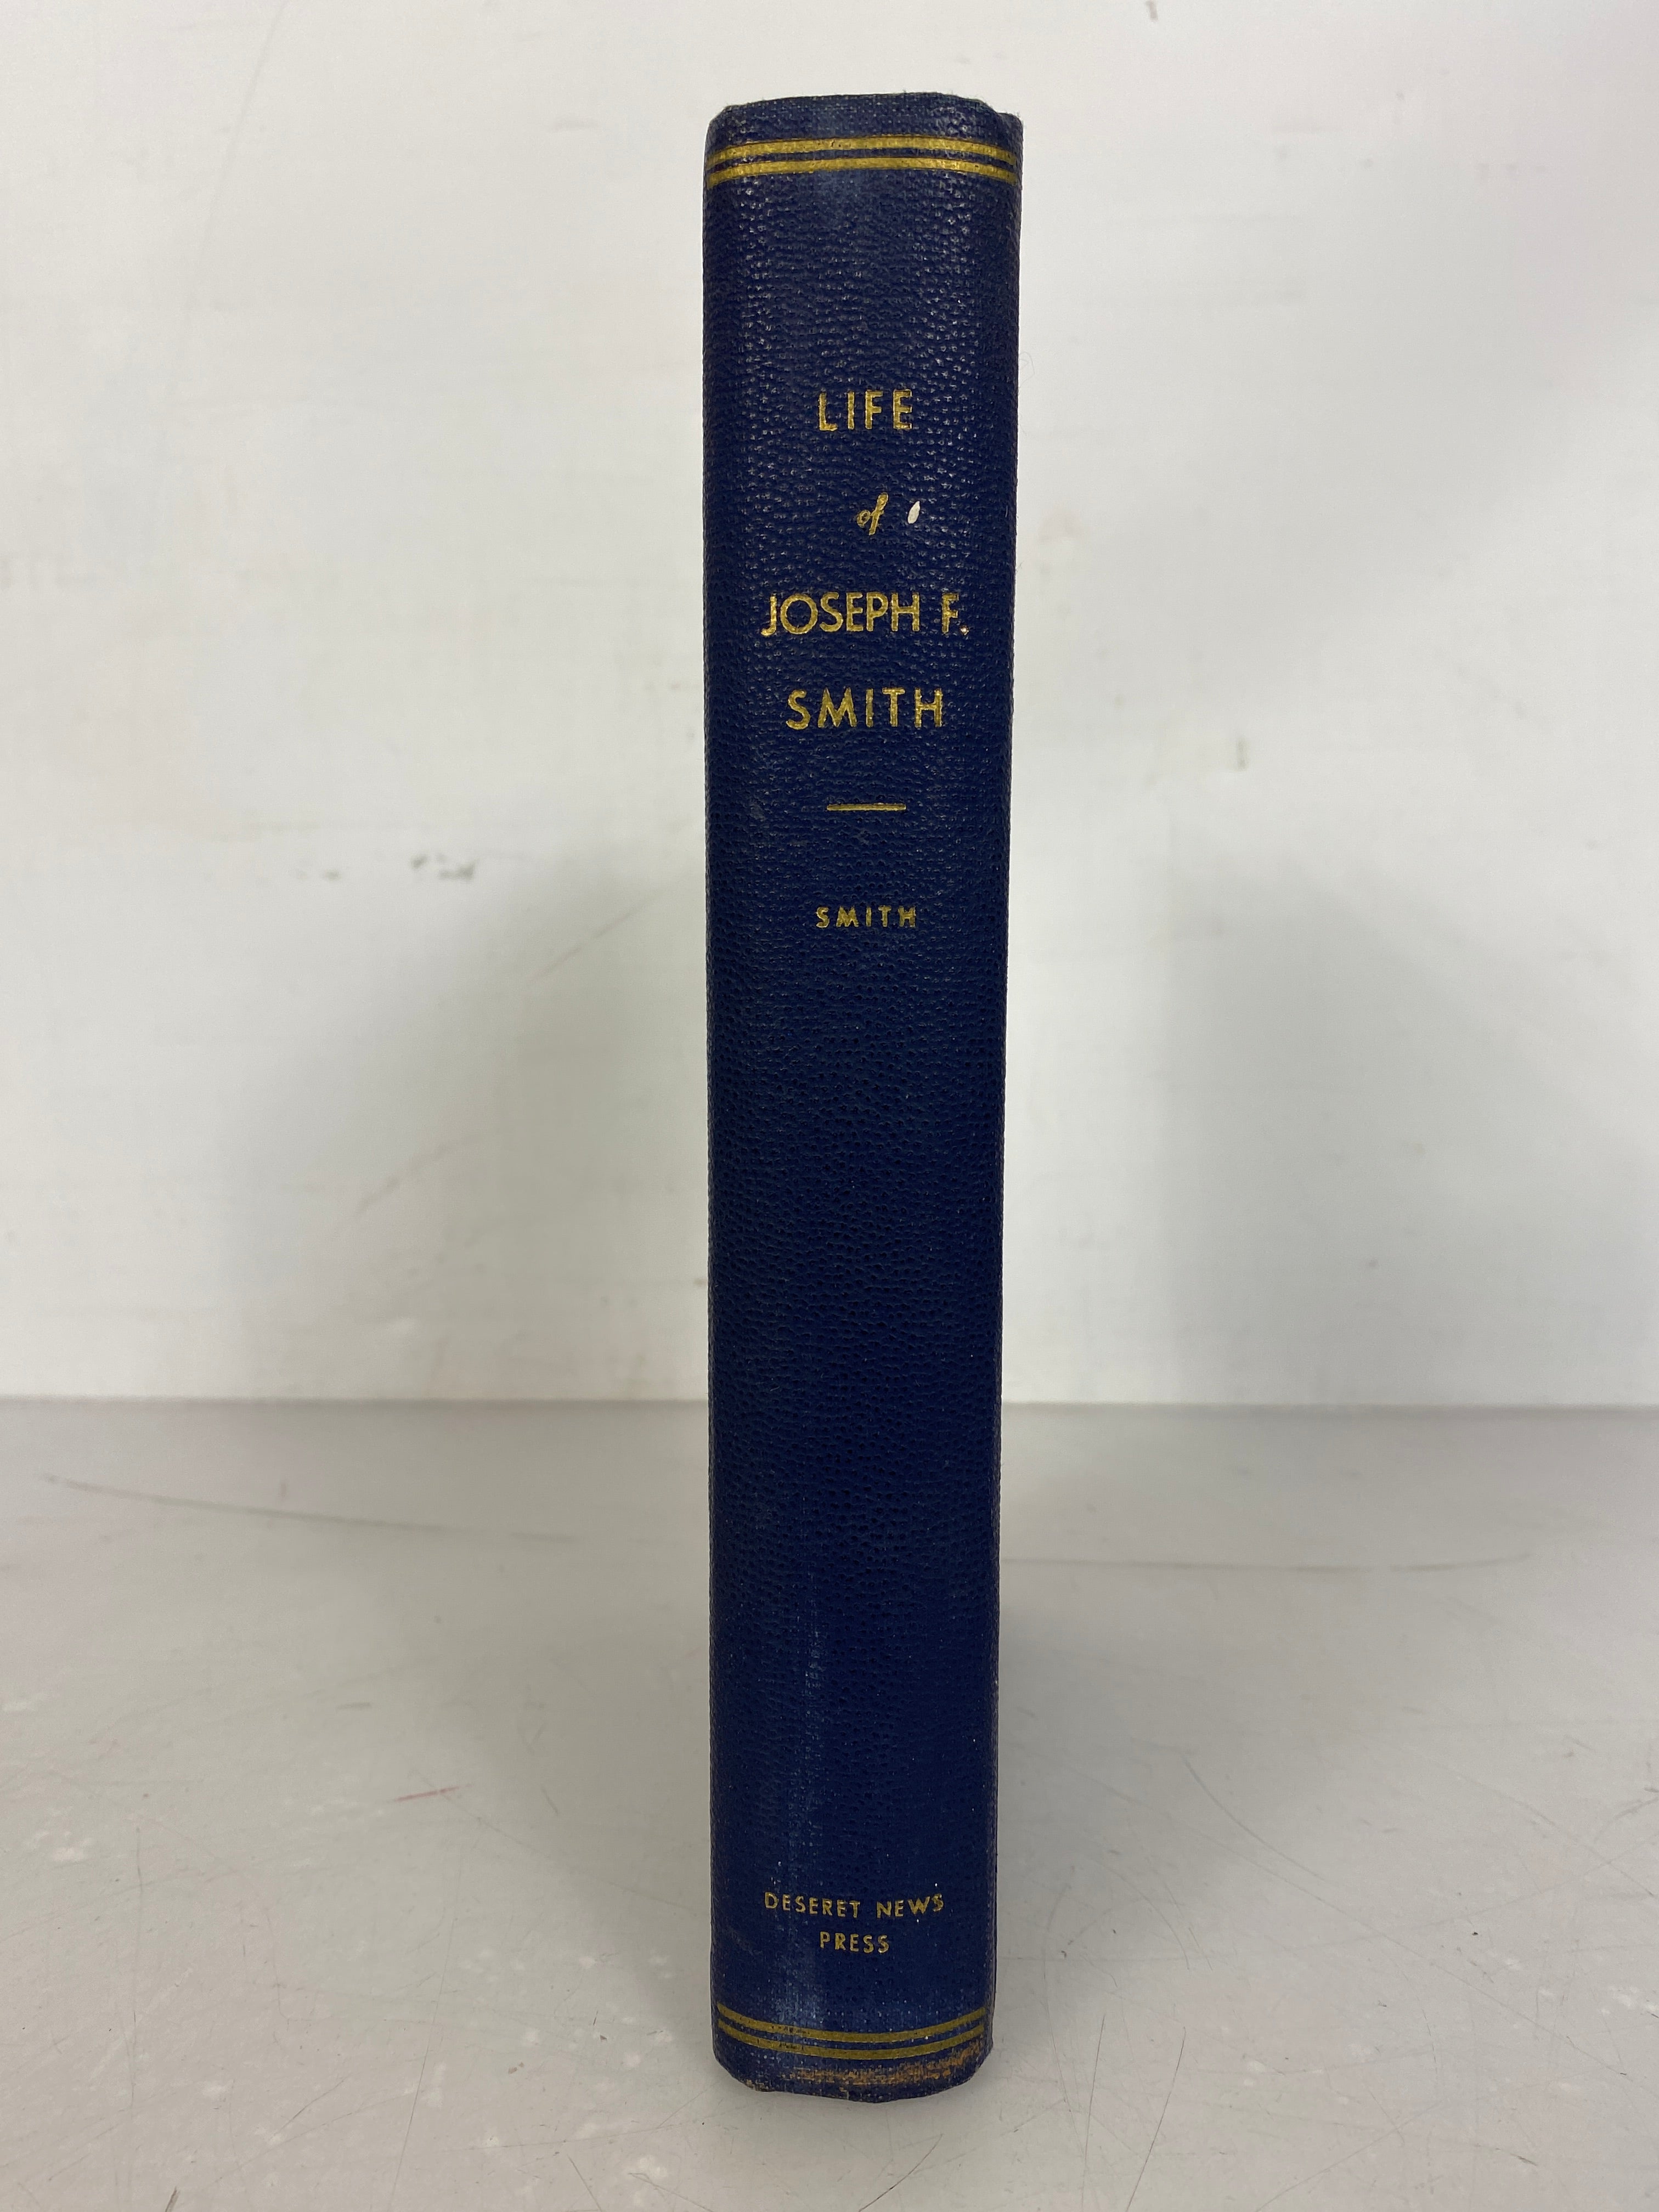 Life of Joseph F. Smith The Deseret News Press 1938 HC